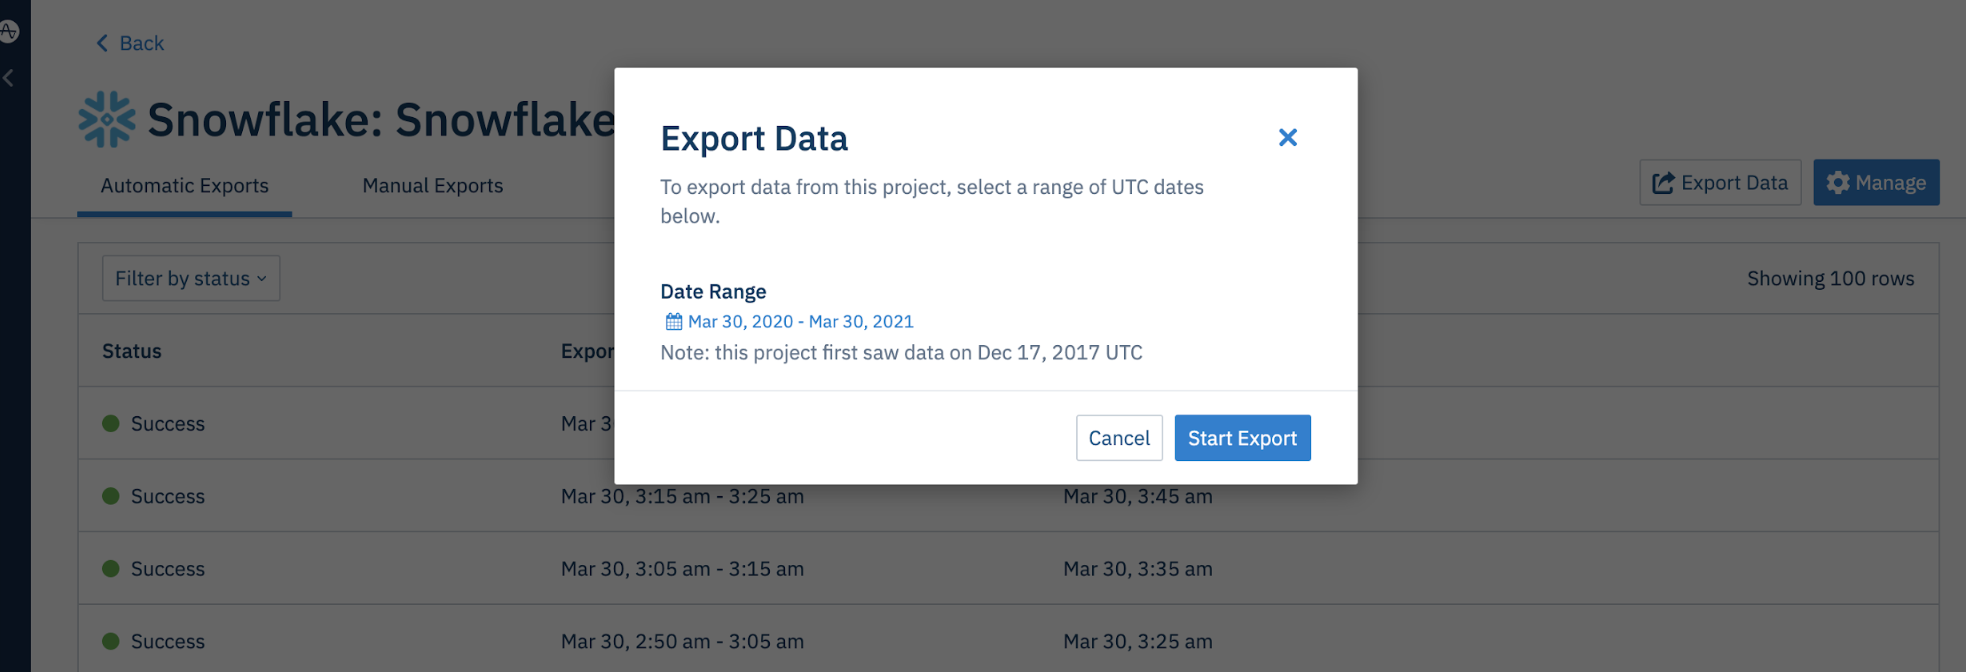 a screenshot of the Snowflake export data modal